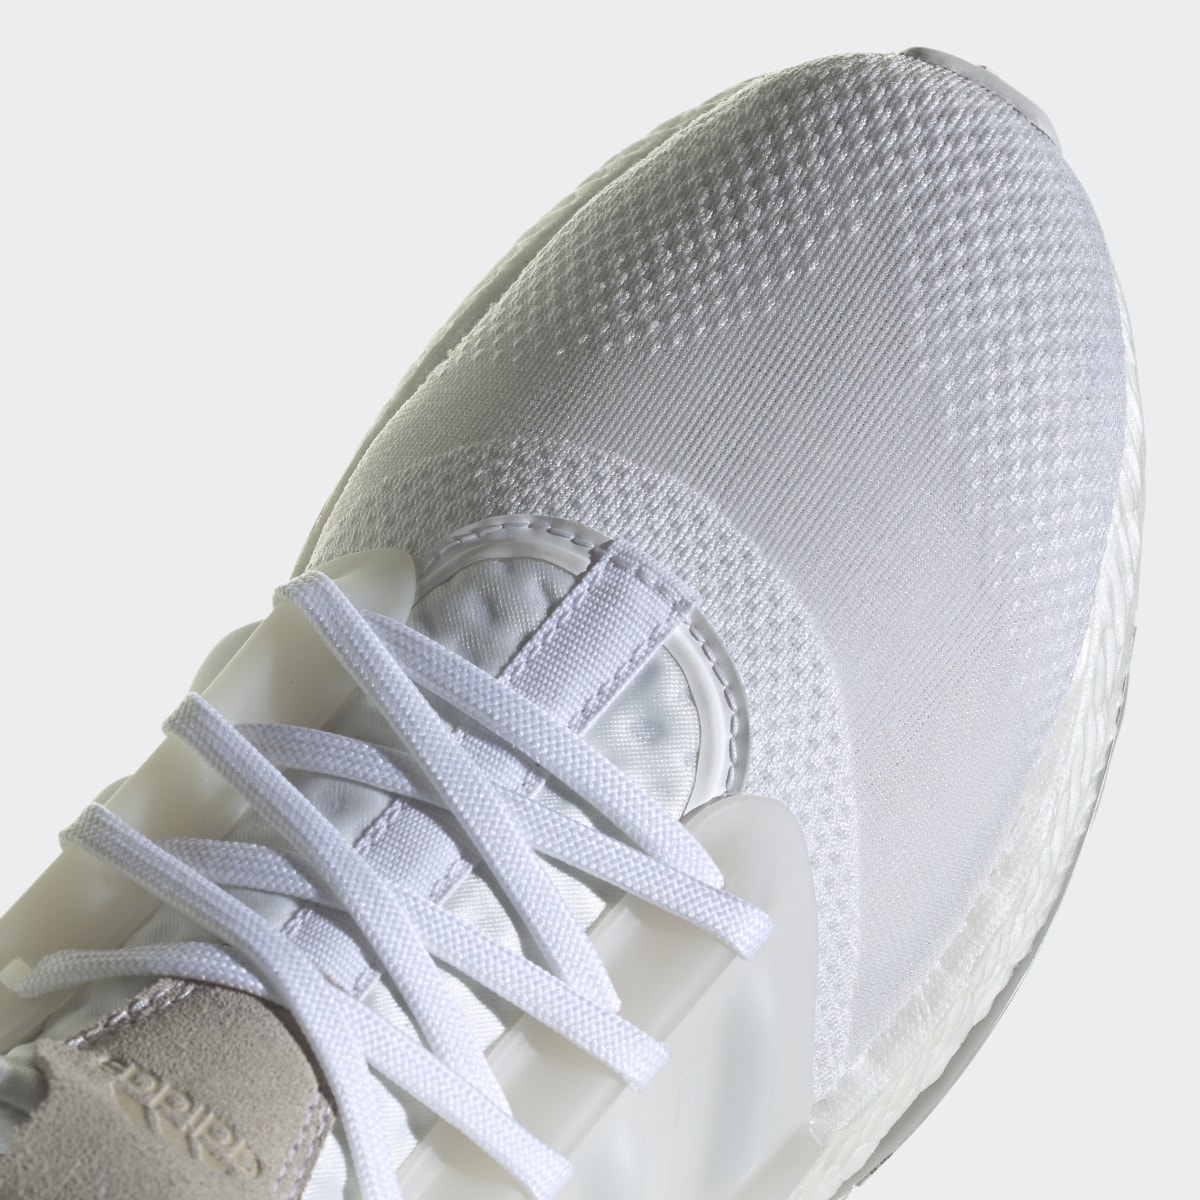 Adidas X_PLRBOOST Ayakkabı. 9